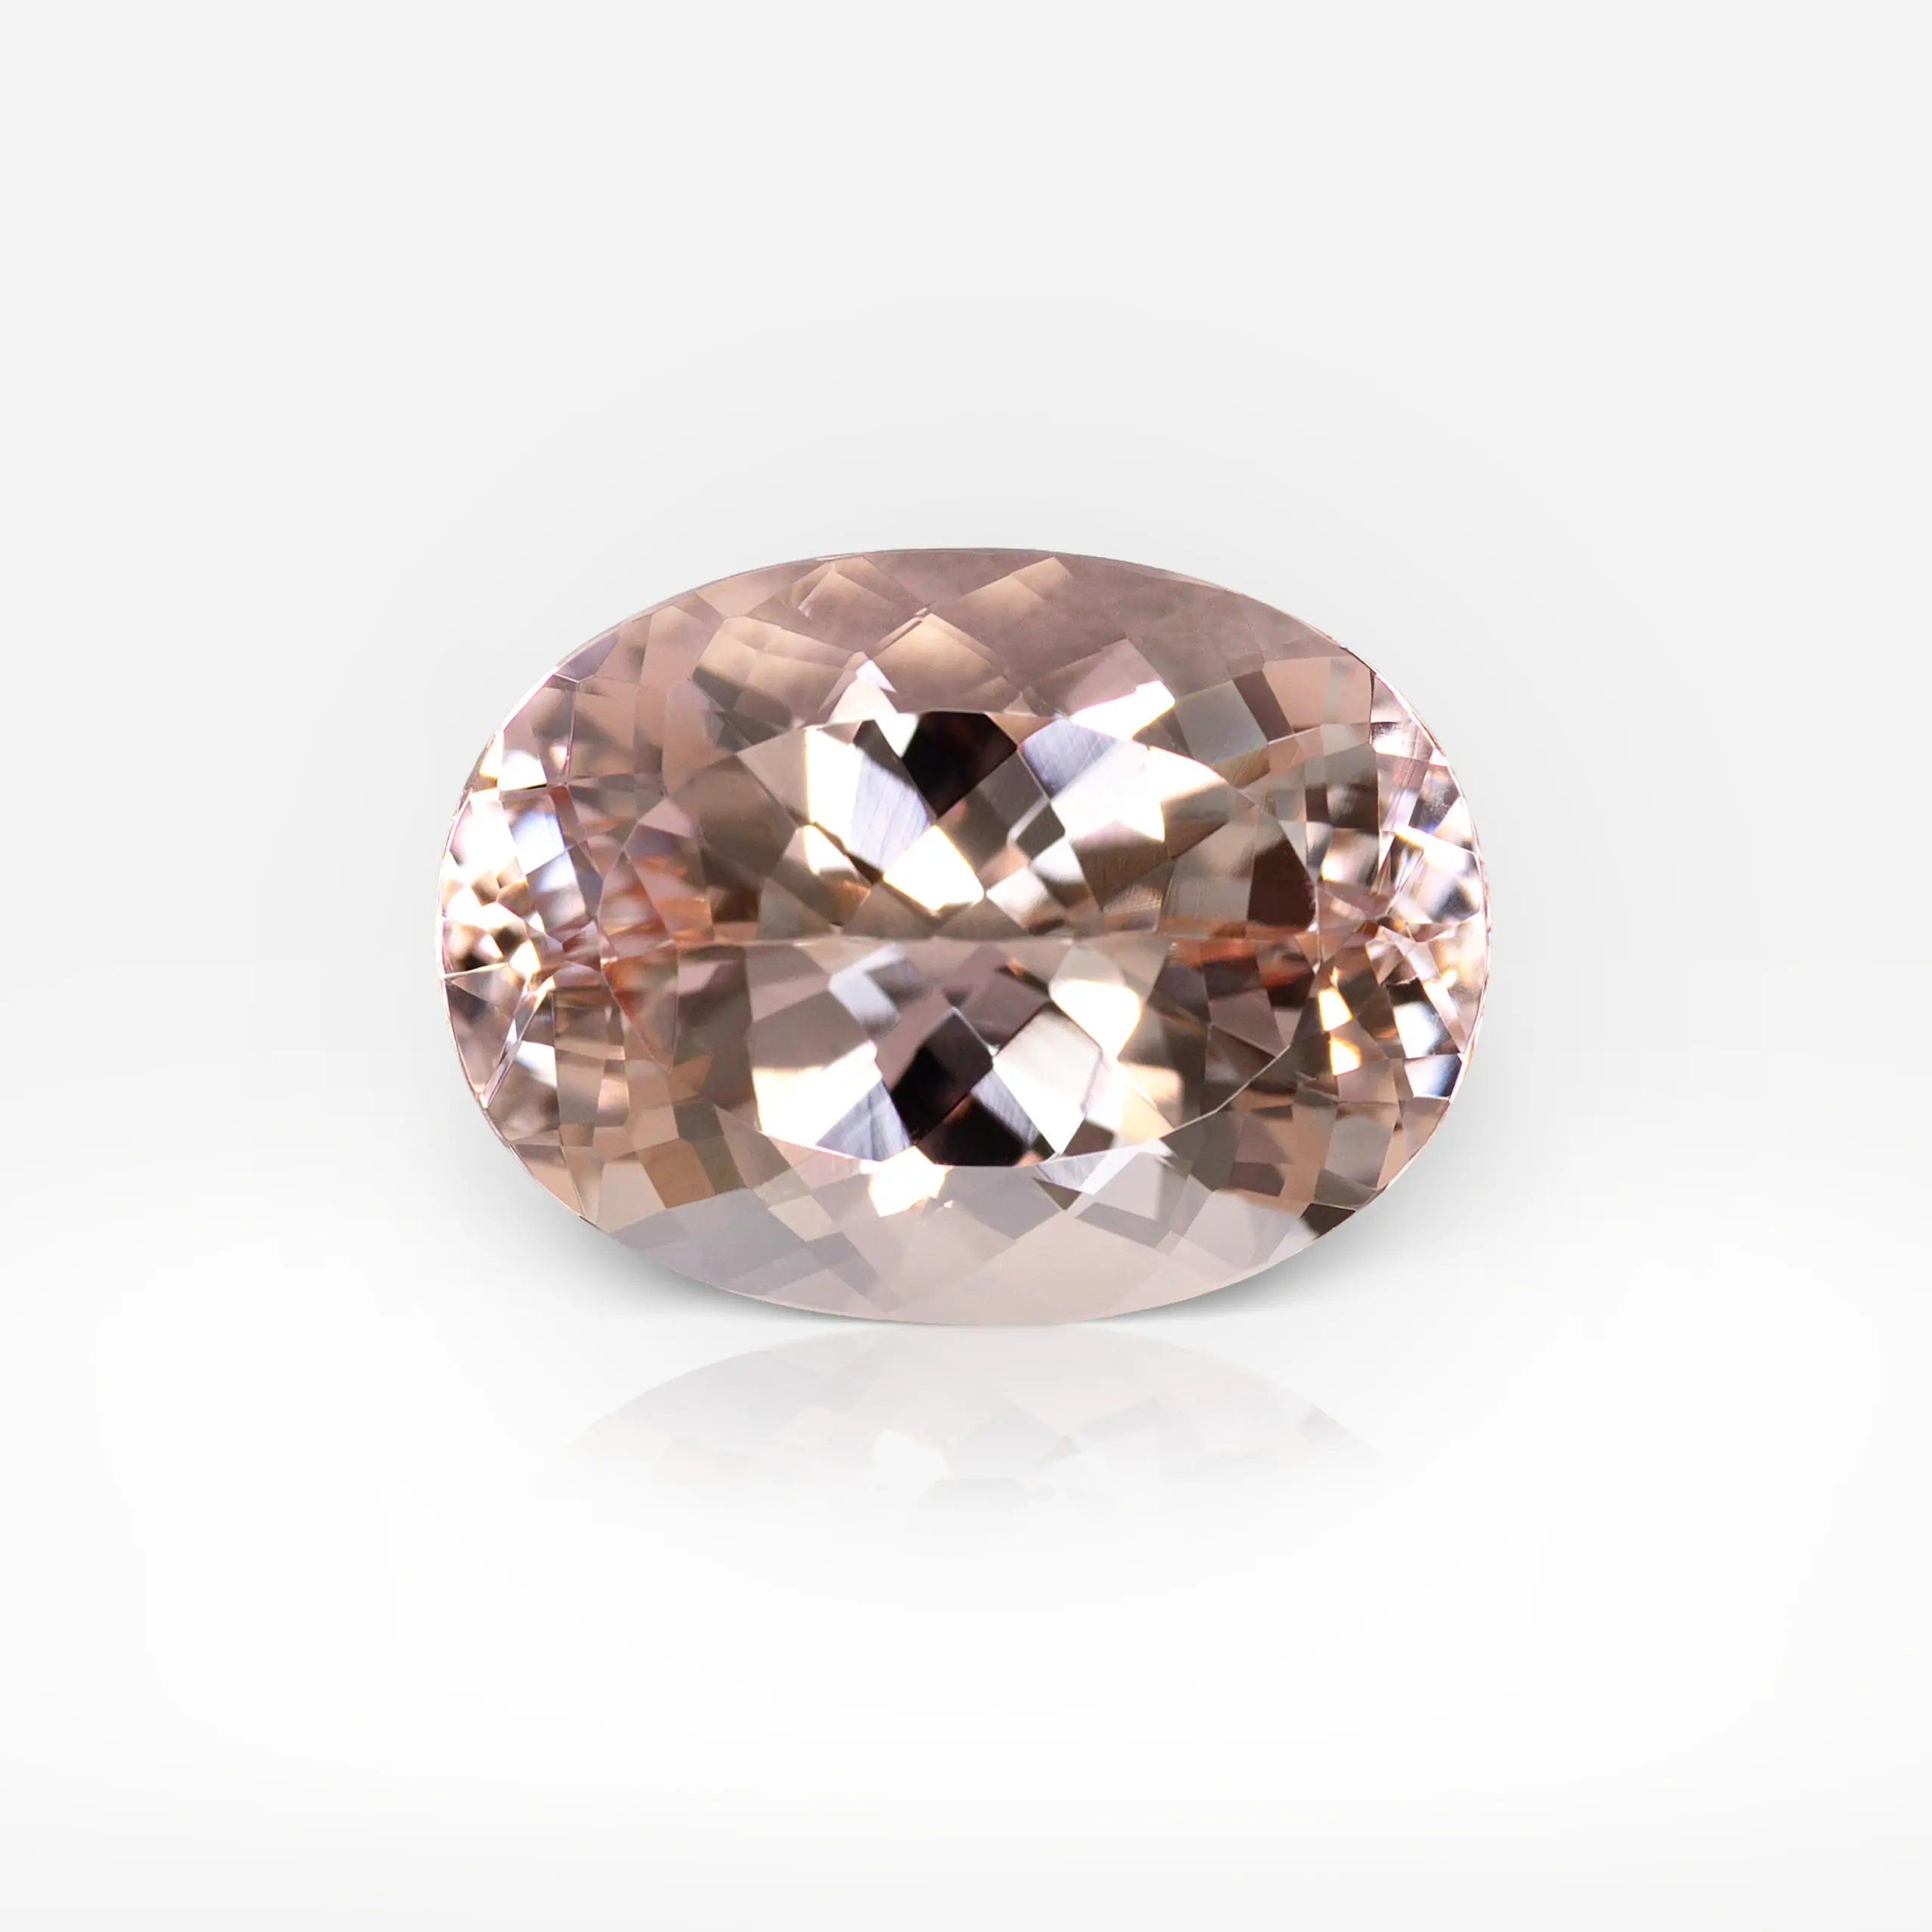 13.95 carat Oval Shape Peach Pink Brazilian Morganite - picture 1